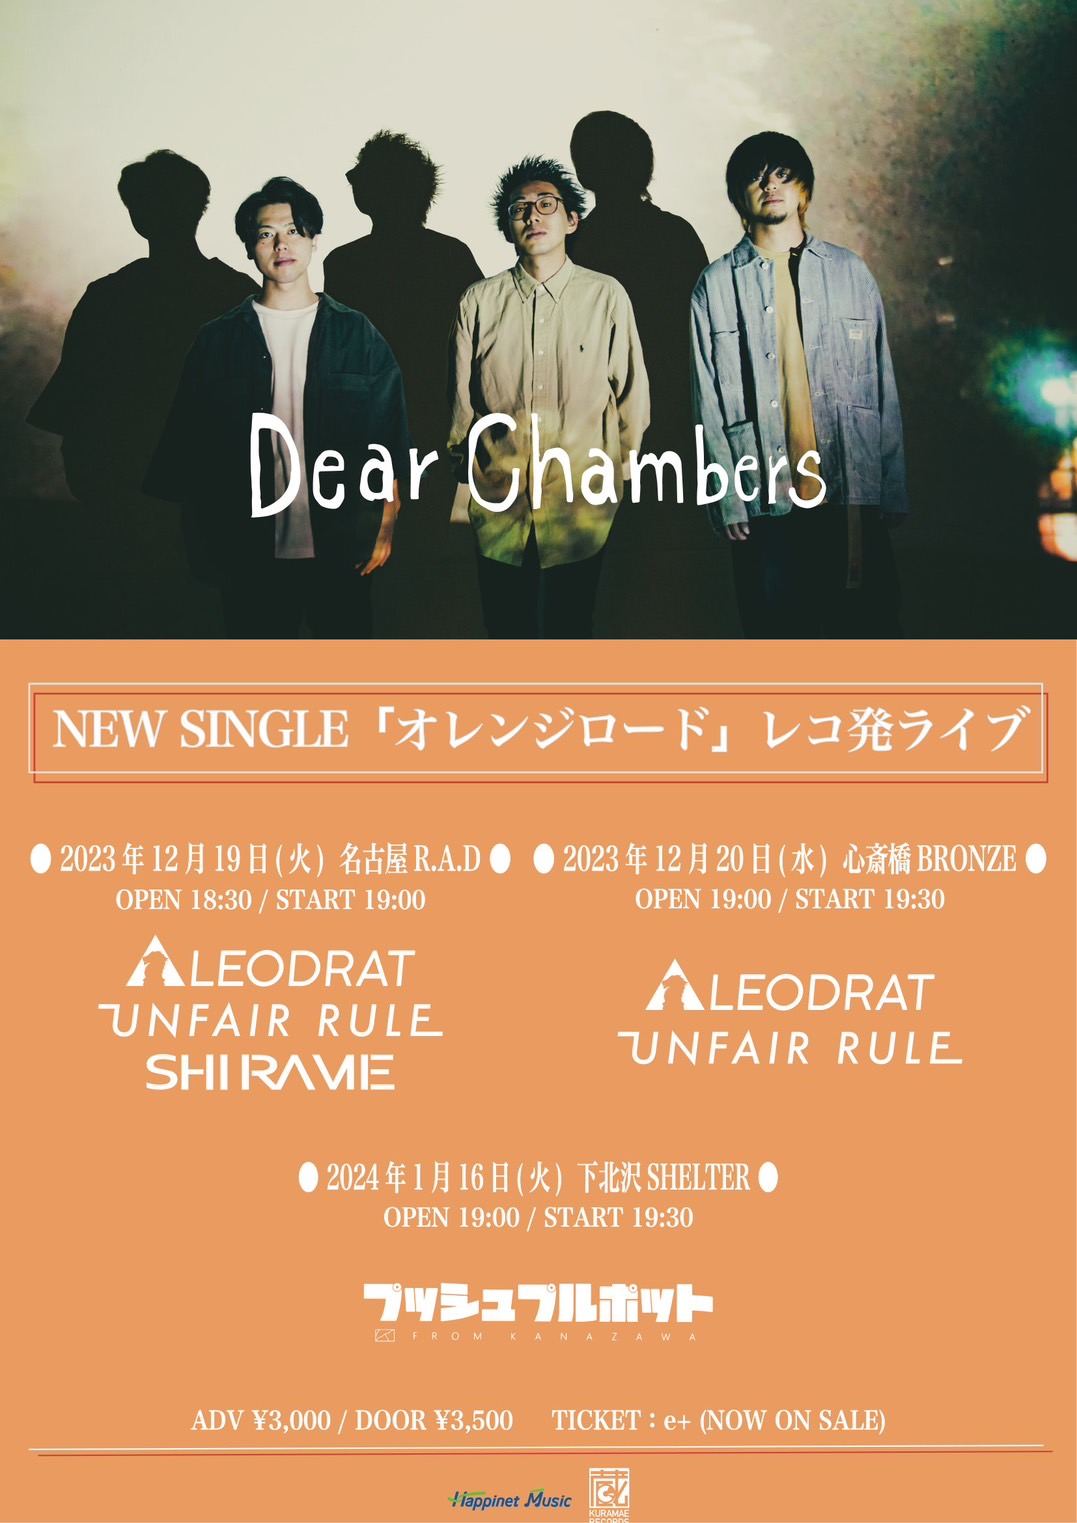 Dear Chambers NEW SINGLE 『オレンジロード』レコ発ライブ